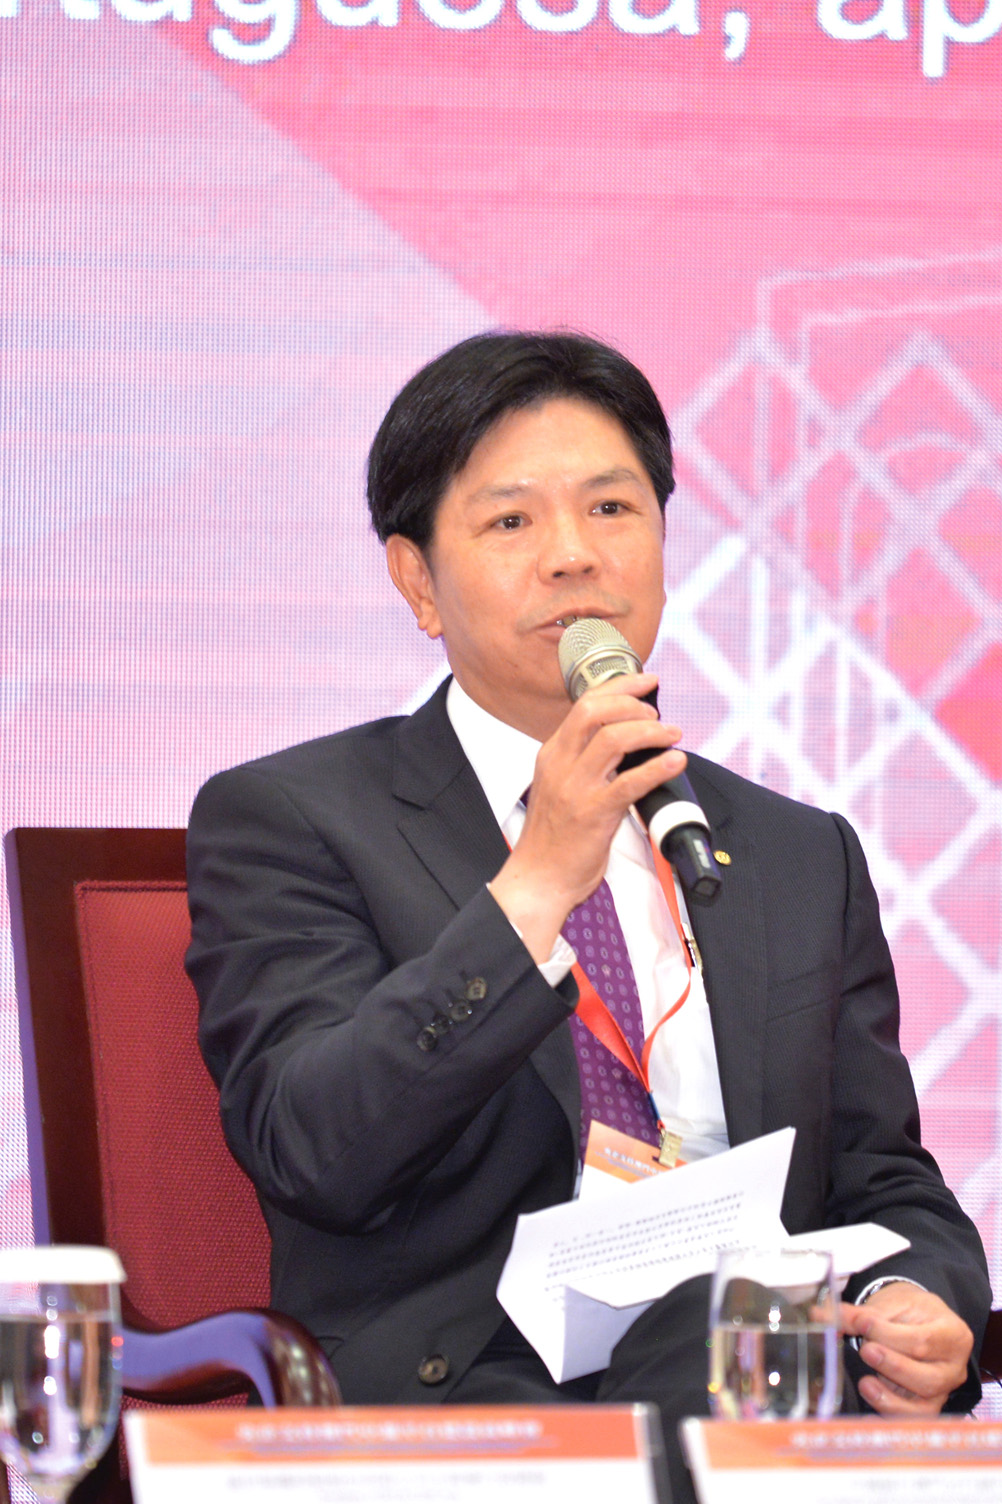 Bank of China Macau Branch Deputy General Manager, Ip Sio Kai